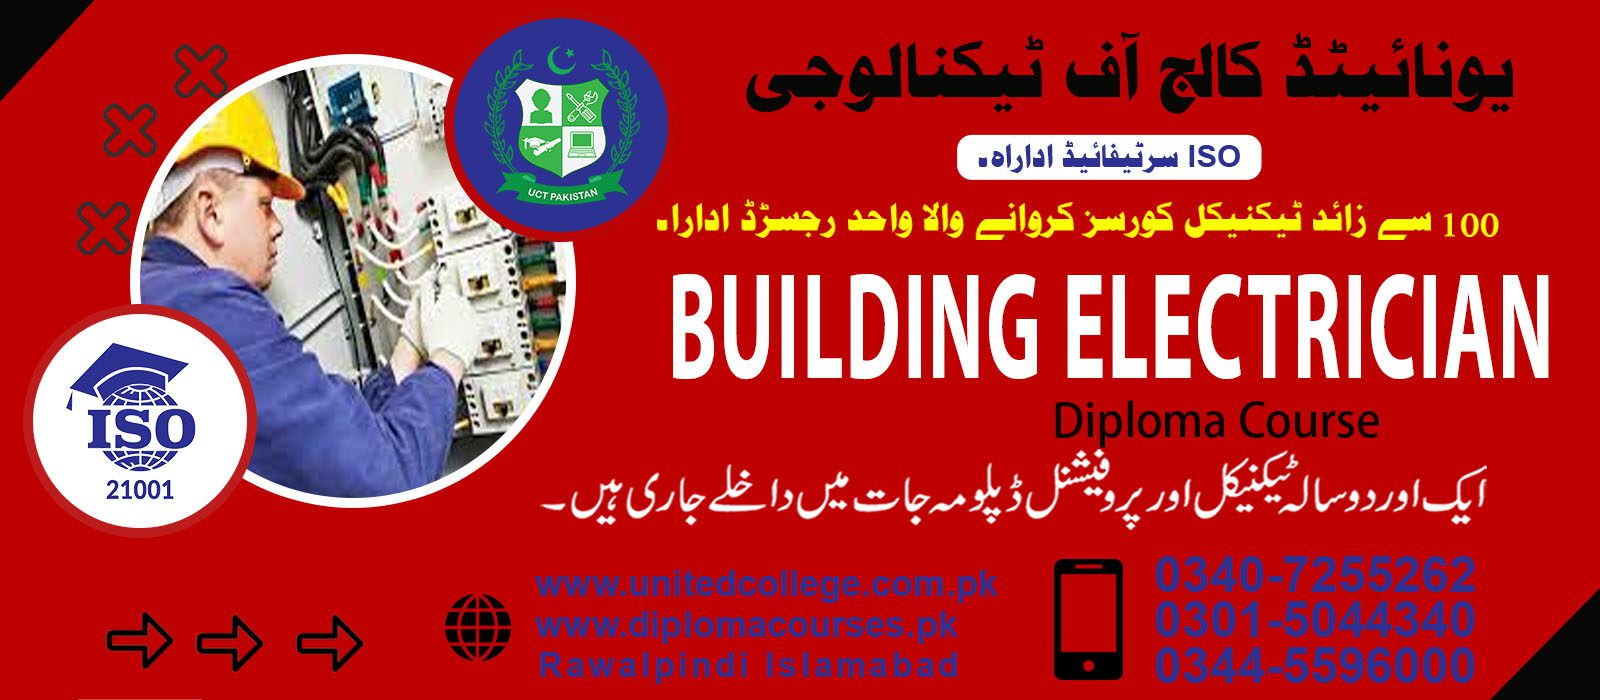 Building electrician Course